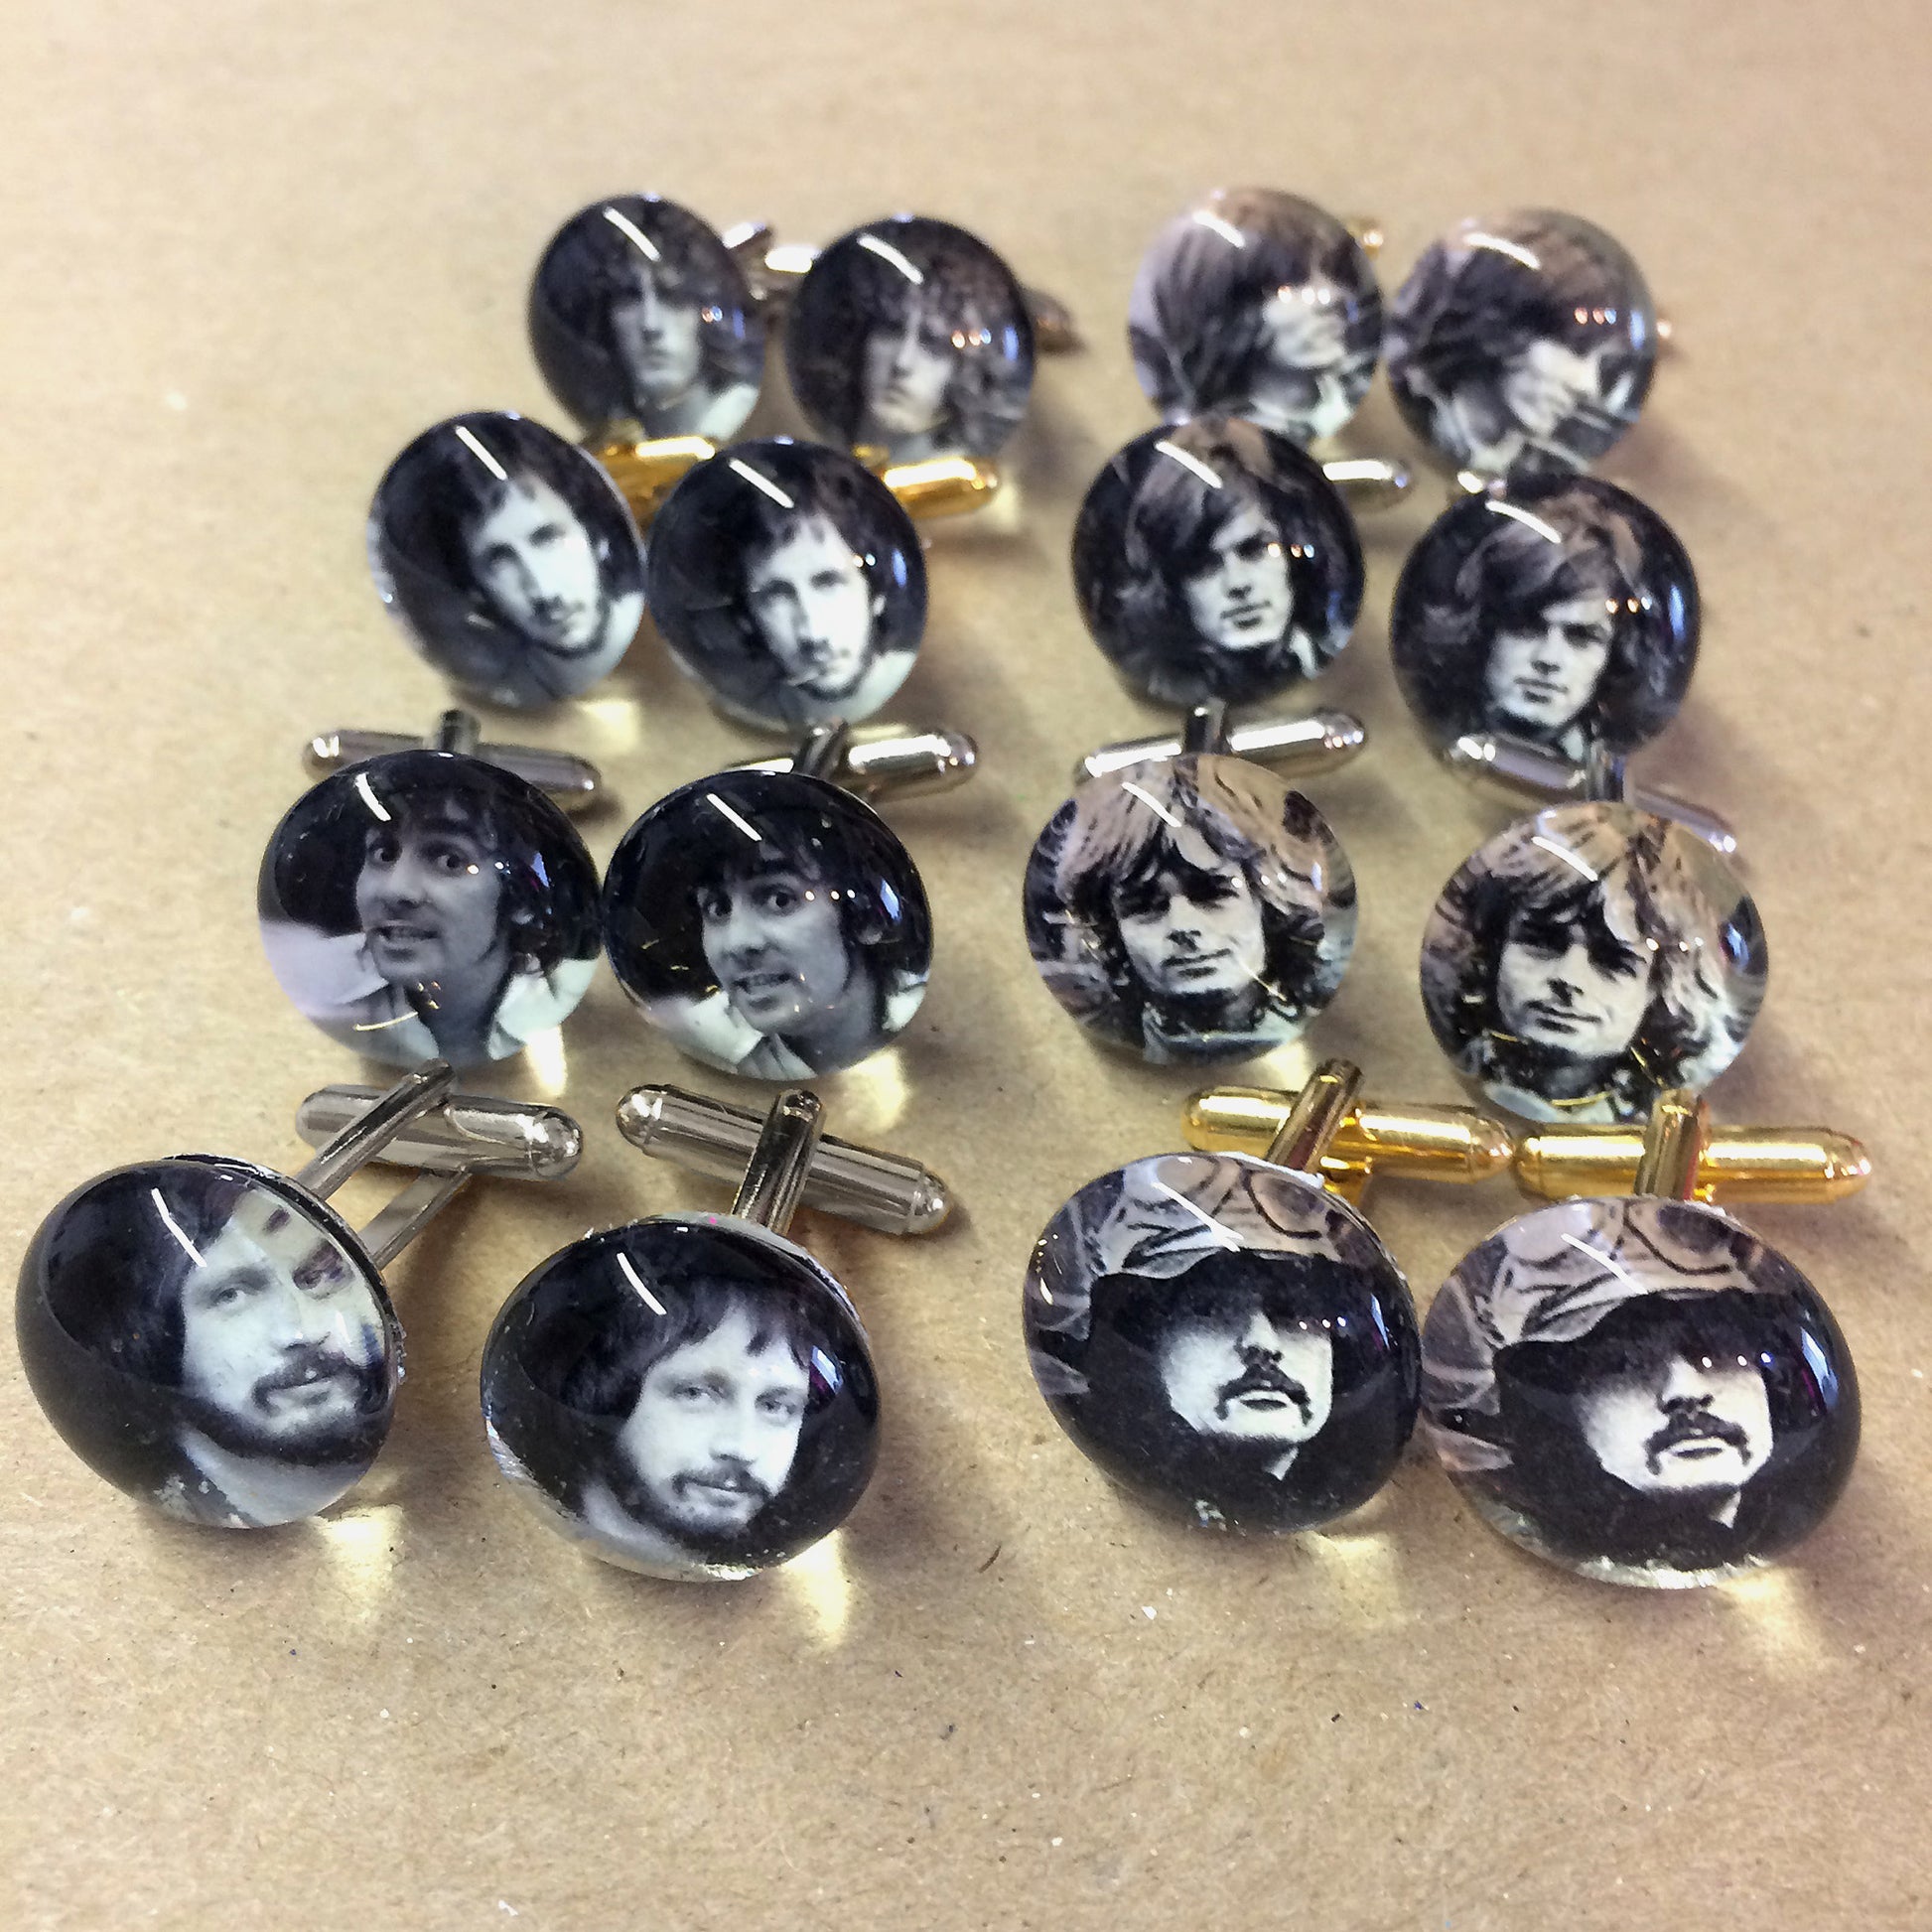 custom cufflinks samples - The Who, Pink Floyd members photos - custom photo cufflinks by BBJ